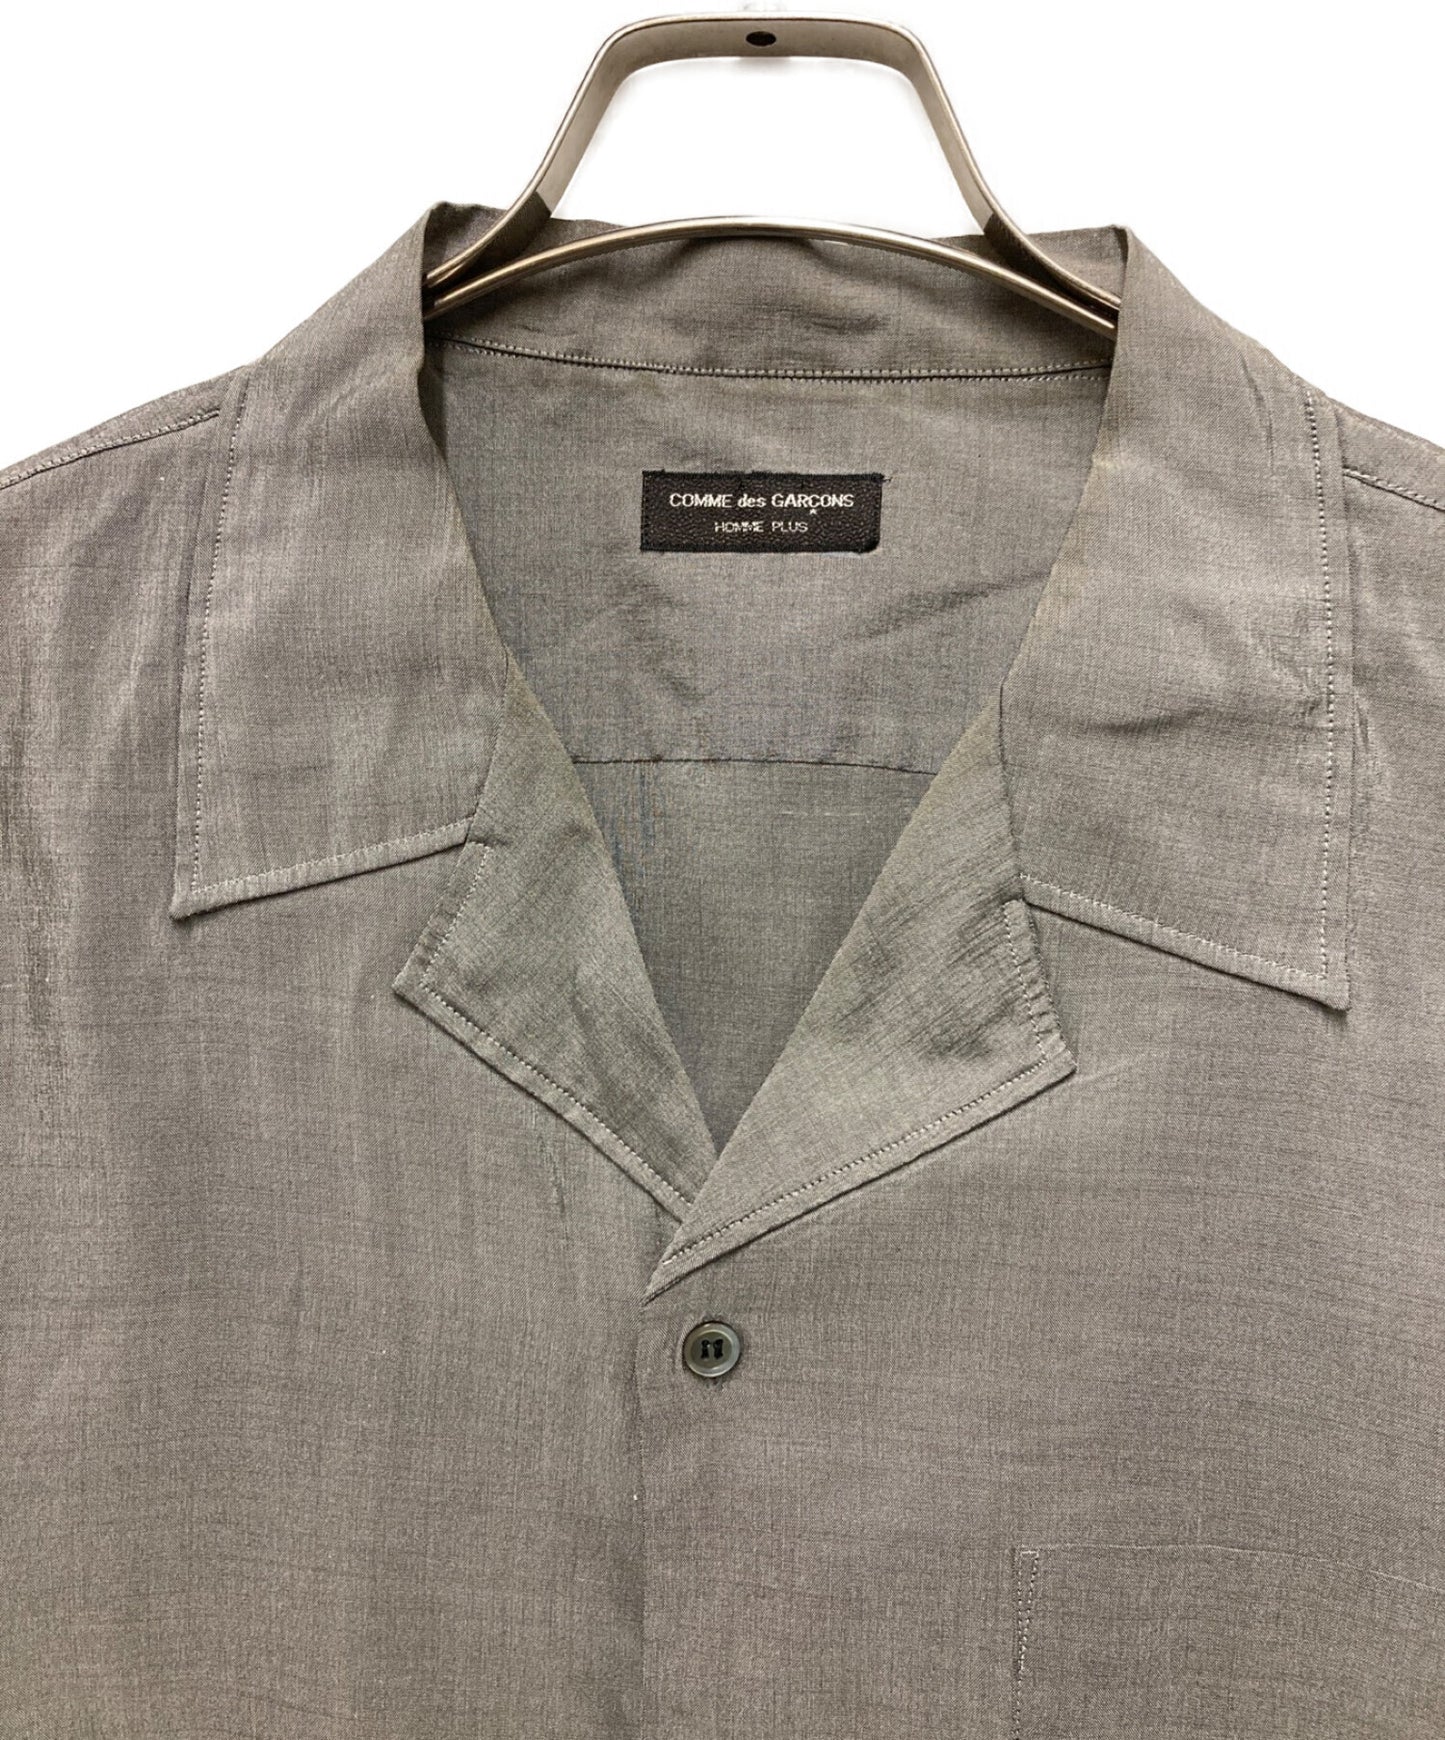 Comme des Garcons Homme Plus真丝Poly Open Collar衬衫AD1997档案项圈缝制设计PB-100130